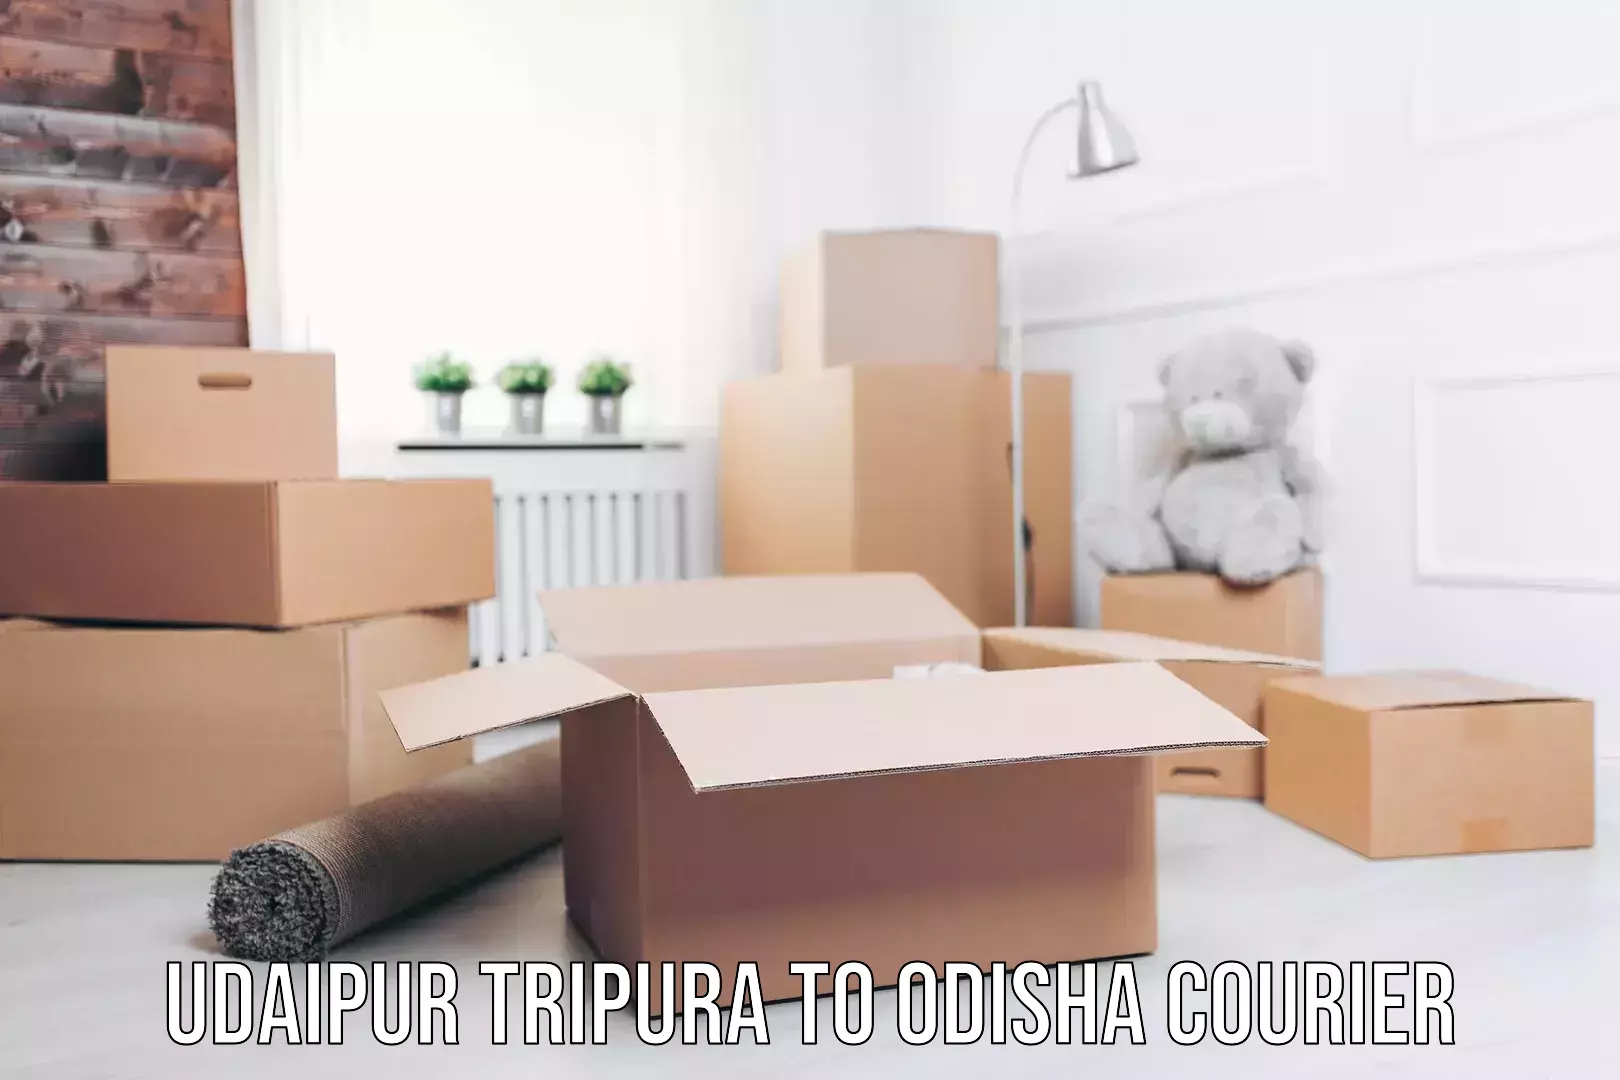 Large-scale shipping solutions Udaipur Tripura to Odisha